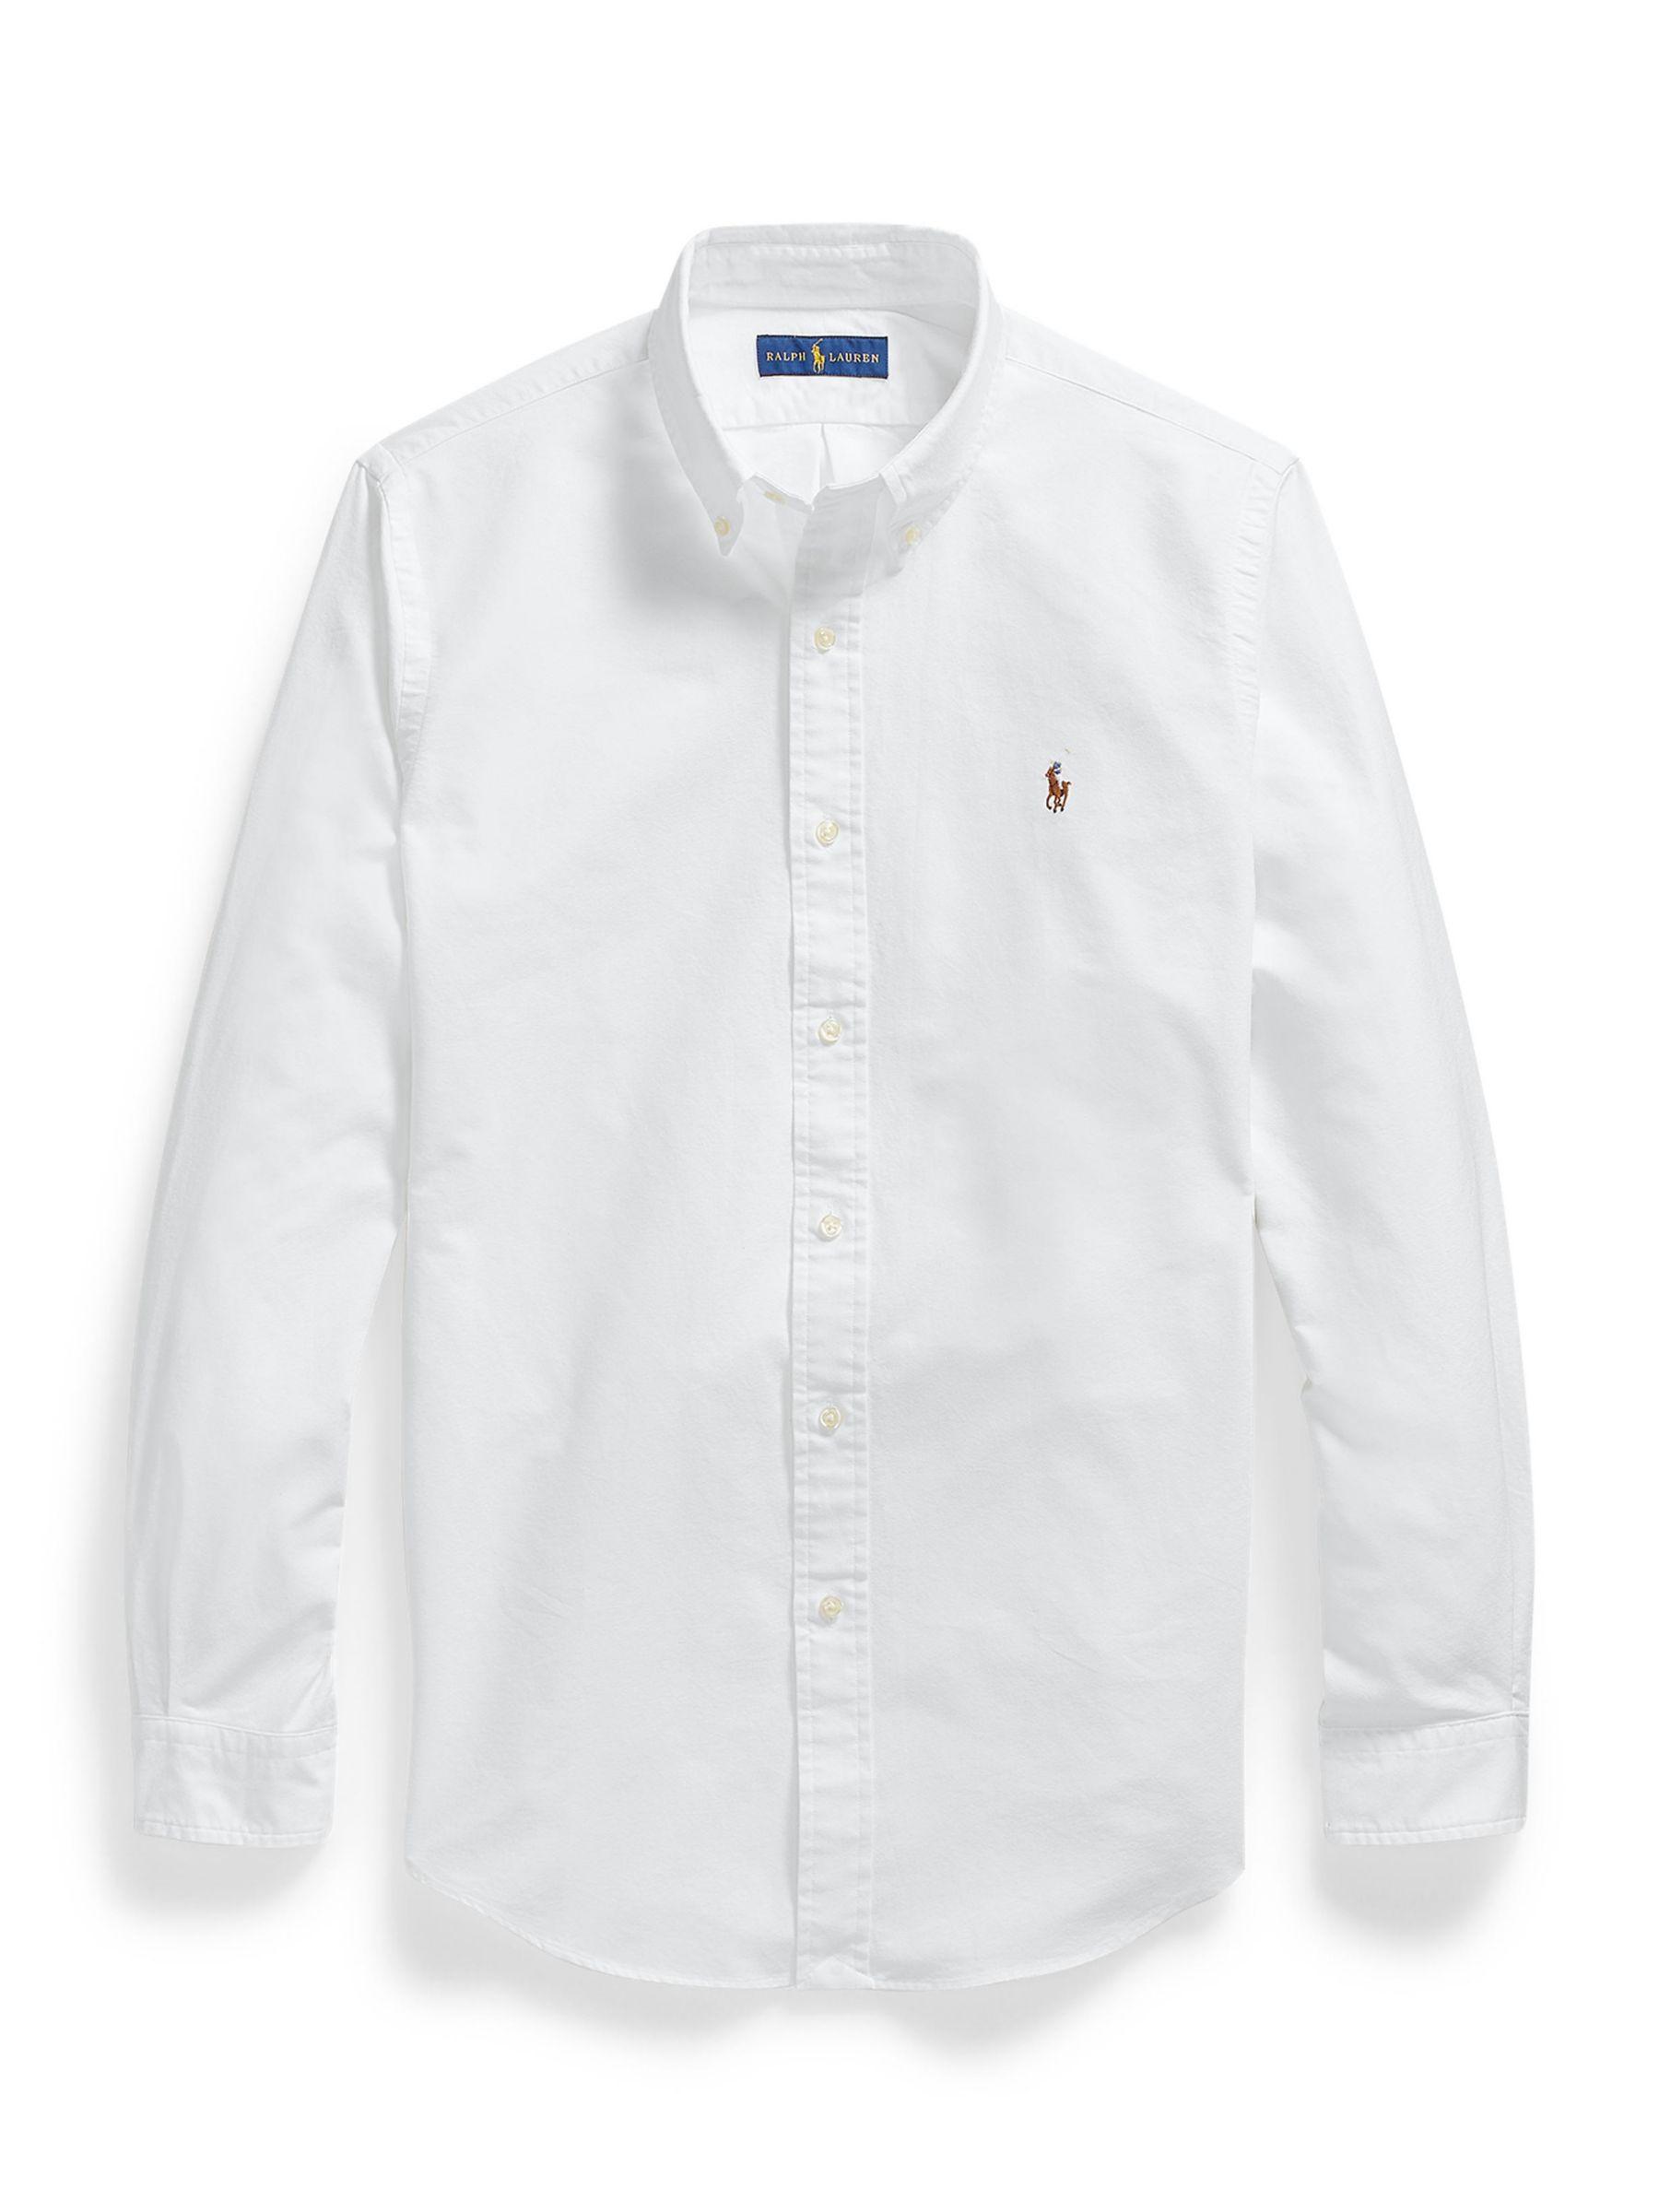 Polo Ralph Lauren Custom Fit Oxford Shirt, White at John Lewis & Partners